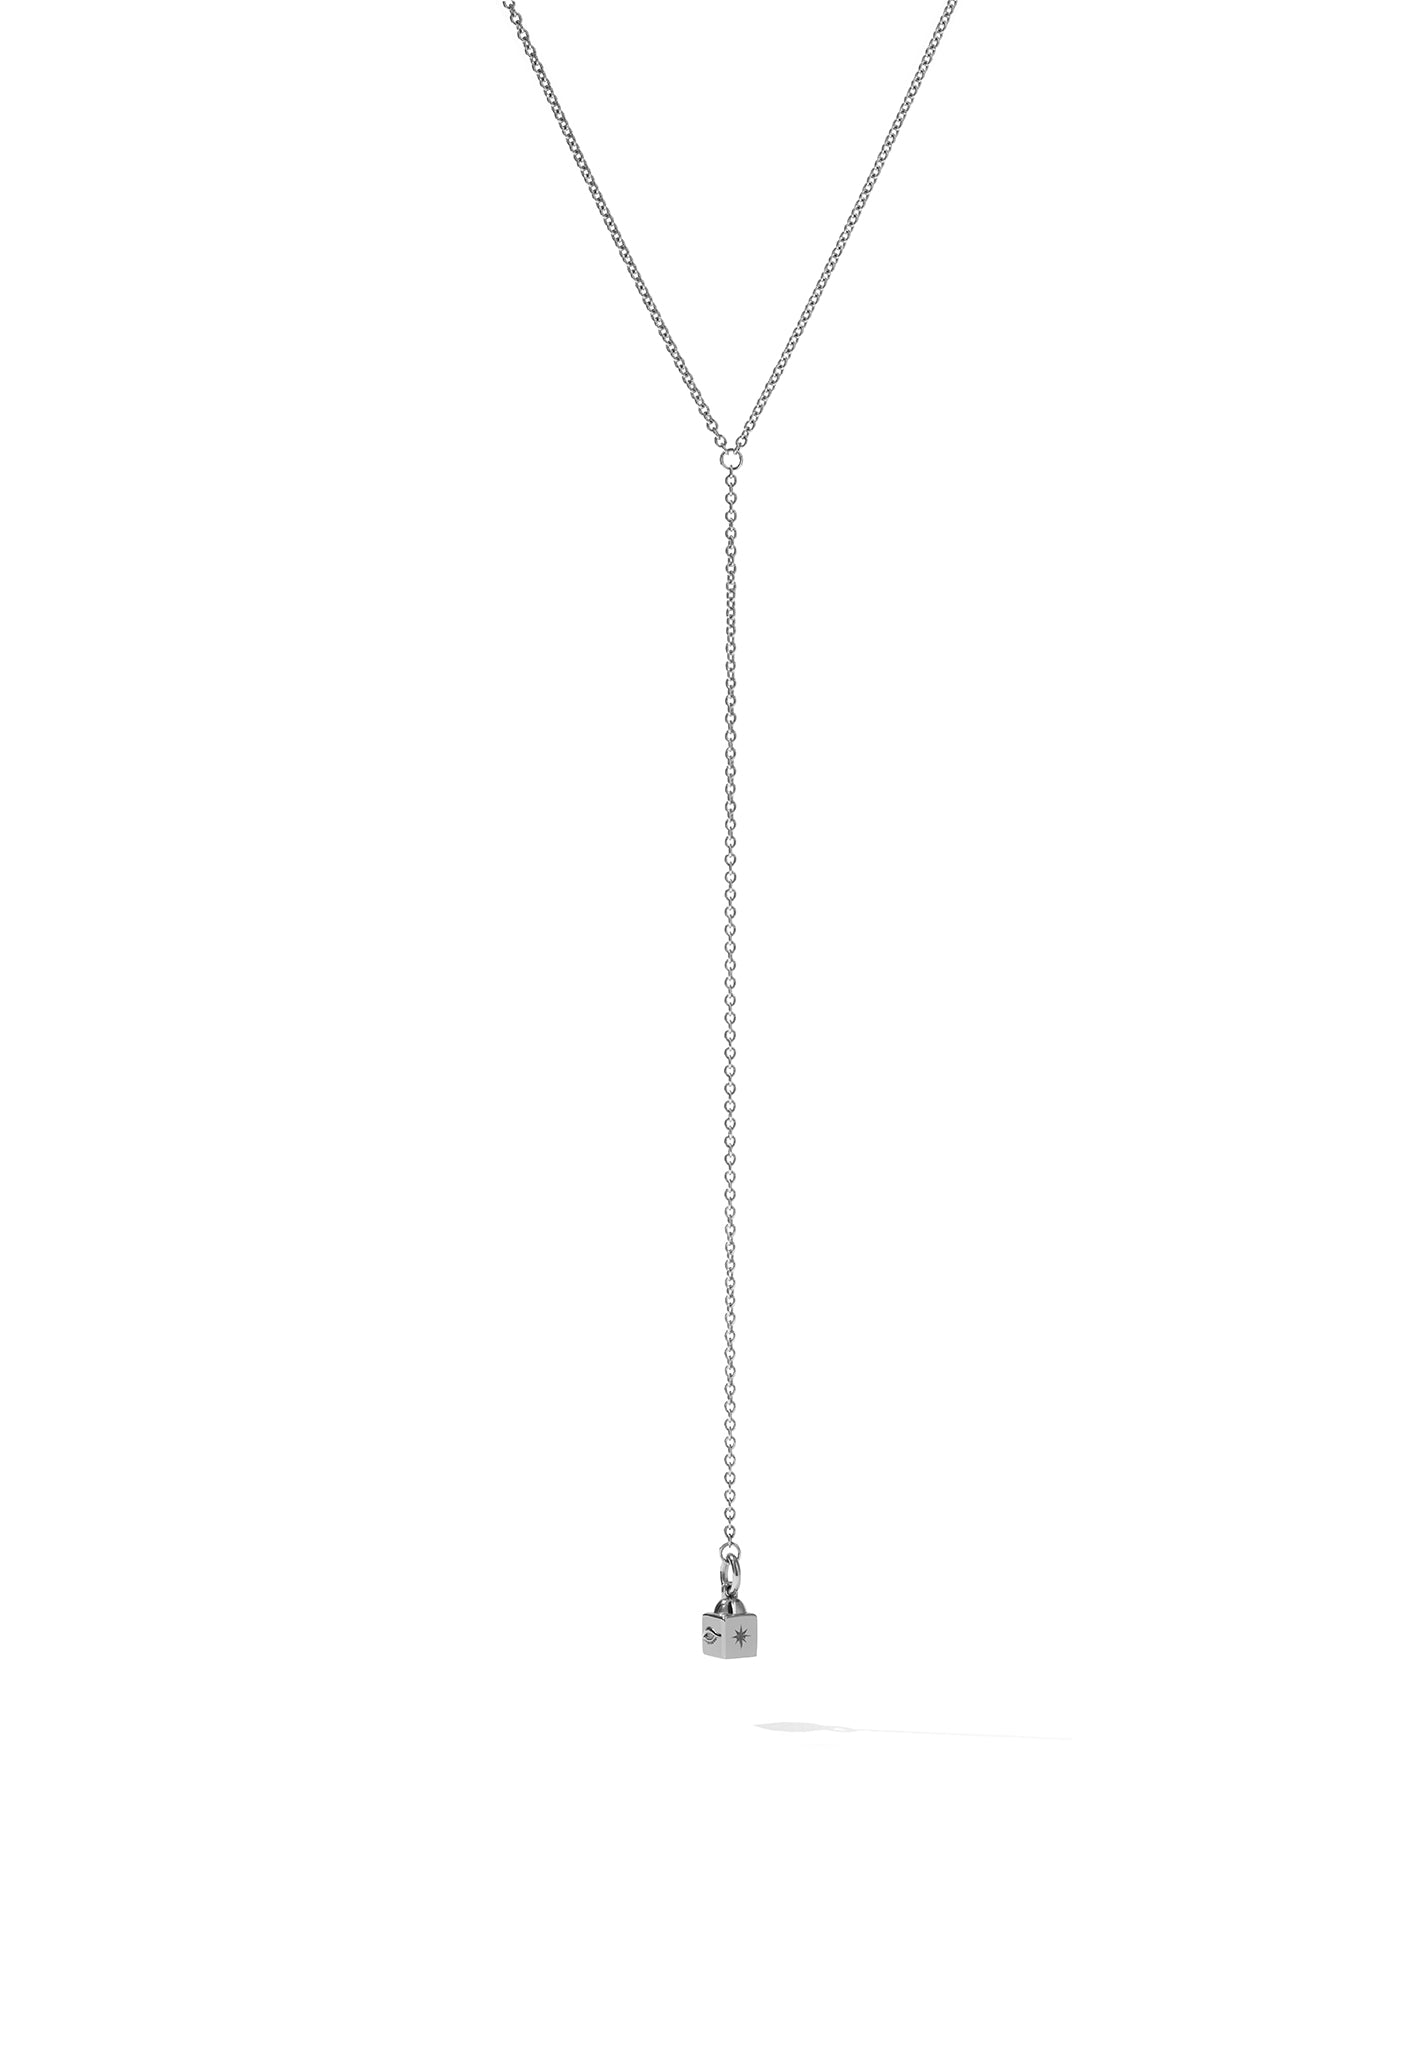 Lumière Lariat Necklace sold by Angel Divine